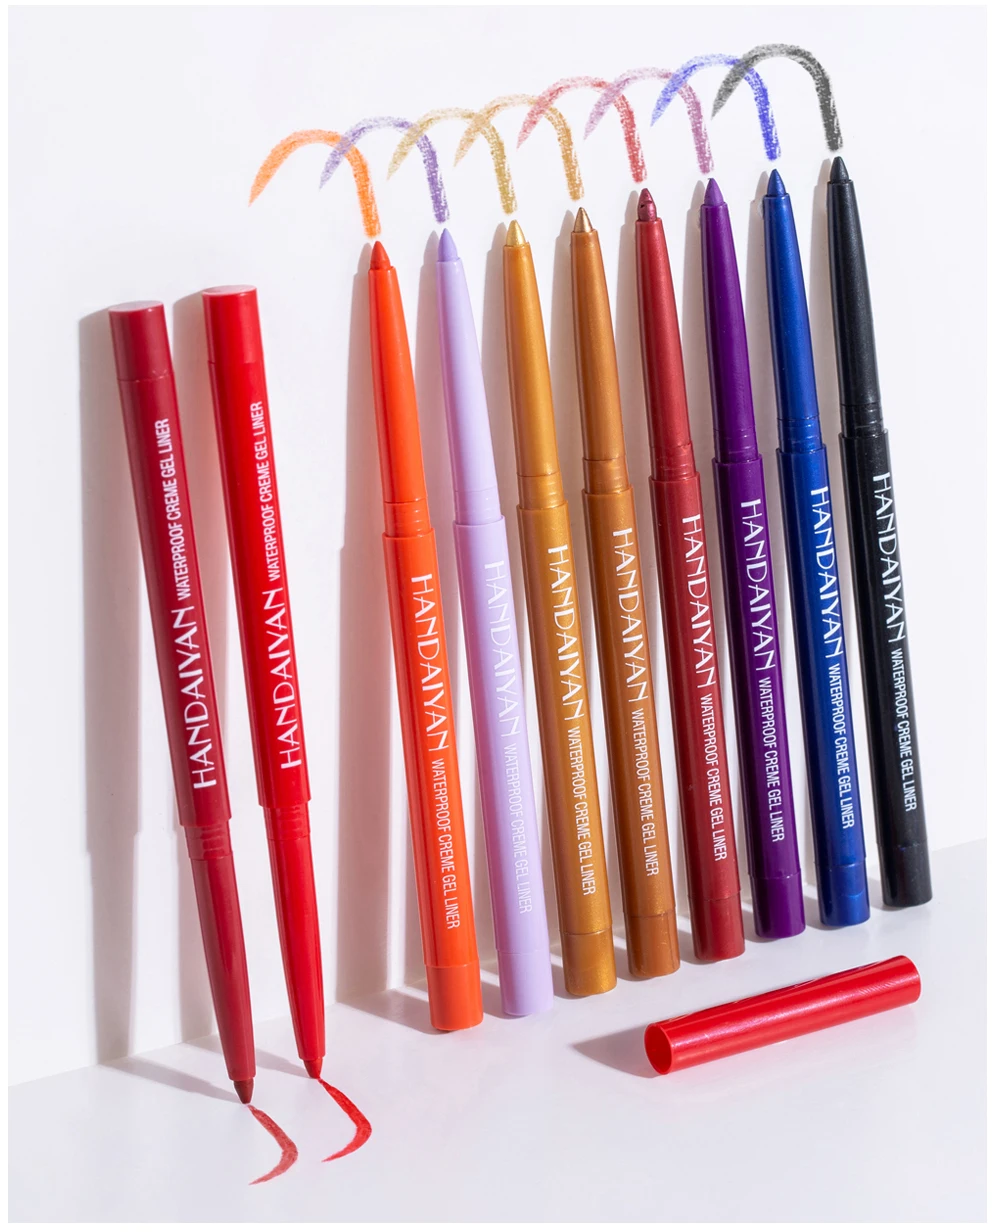 

6pcs 2021 HANDAIYAN eye liner glitter matte waterproof eyeliner adhesive pencil colorful set private label pen